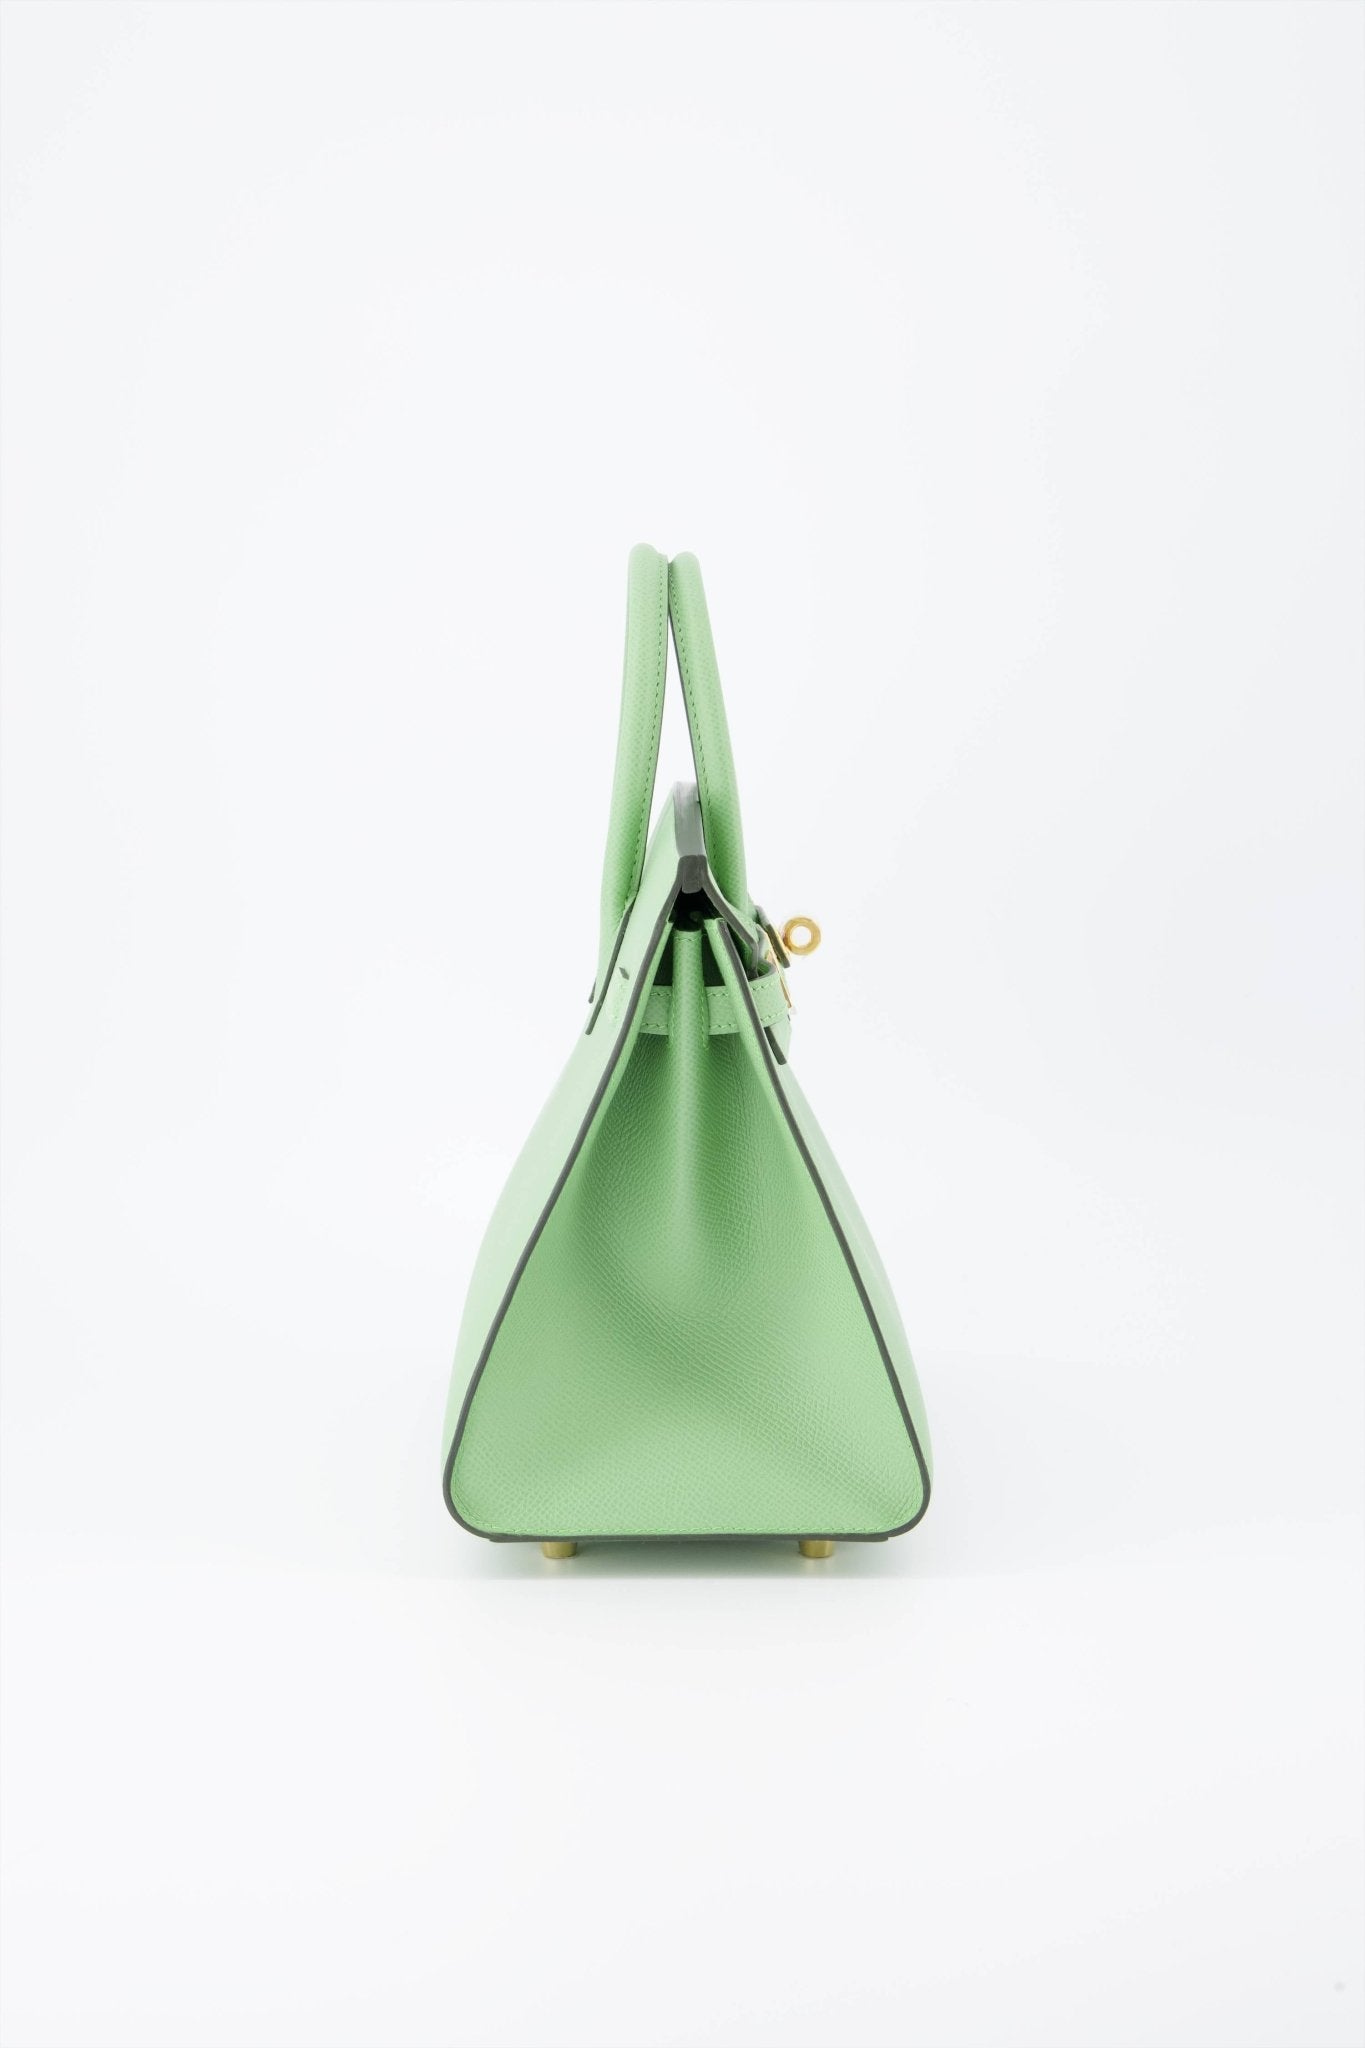 Hermes Birkin 25 Sellier Handbag Vert Criquet